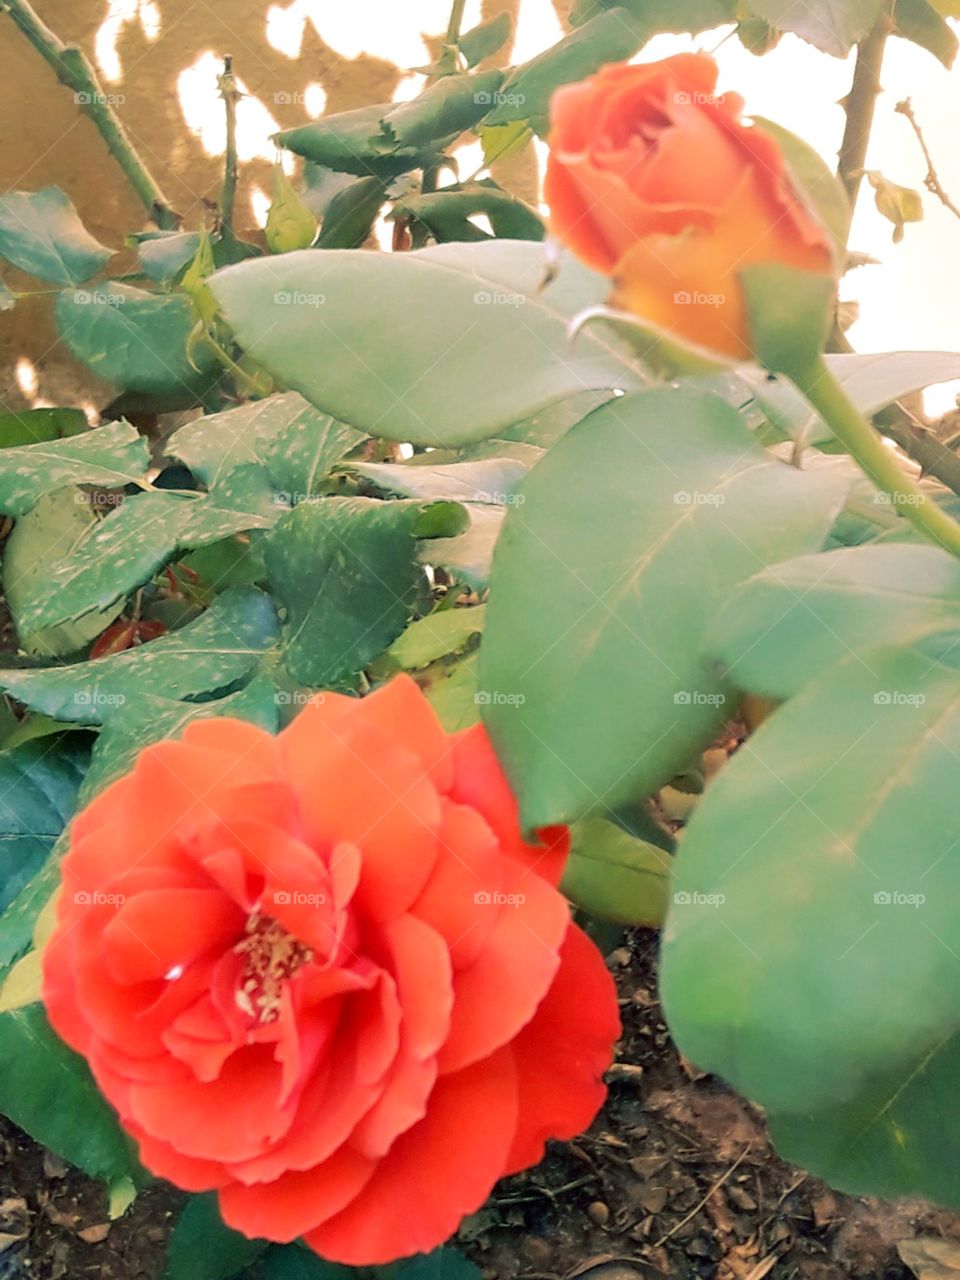 my love red rose